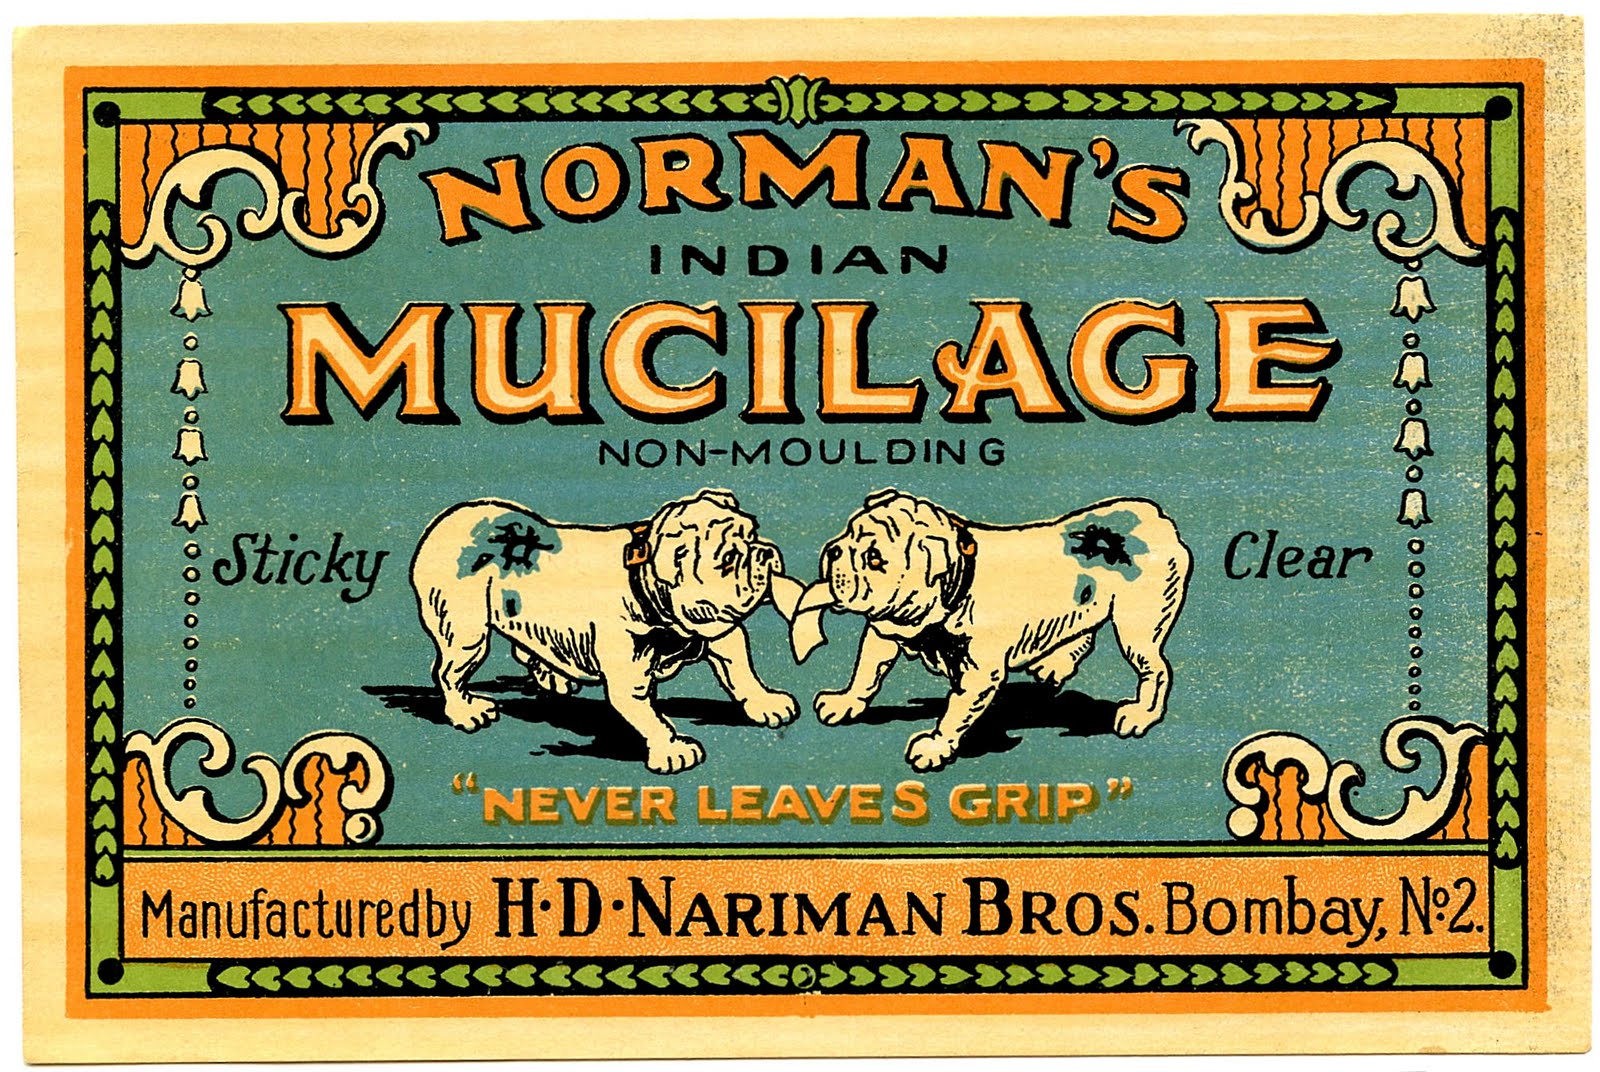 Norman's Indian Mucilage advertisement, bulldog strength glue